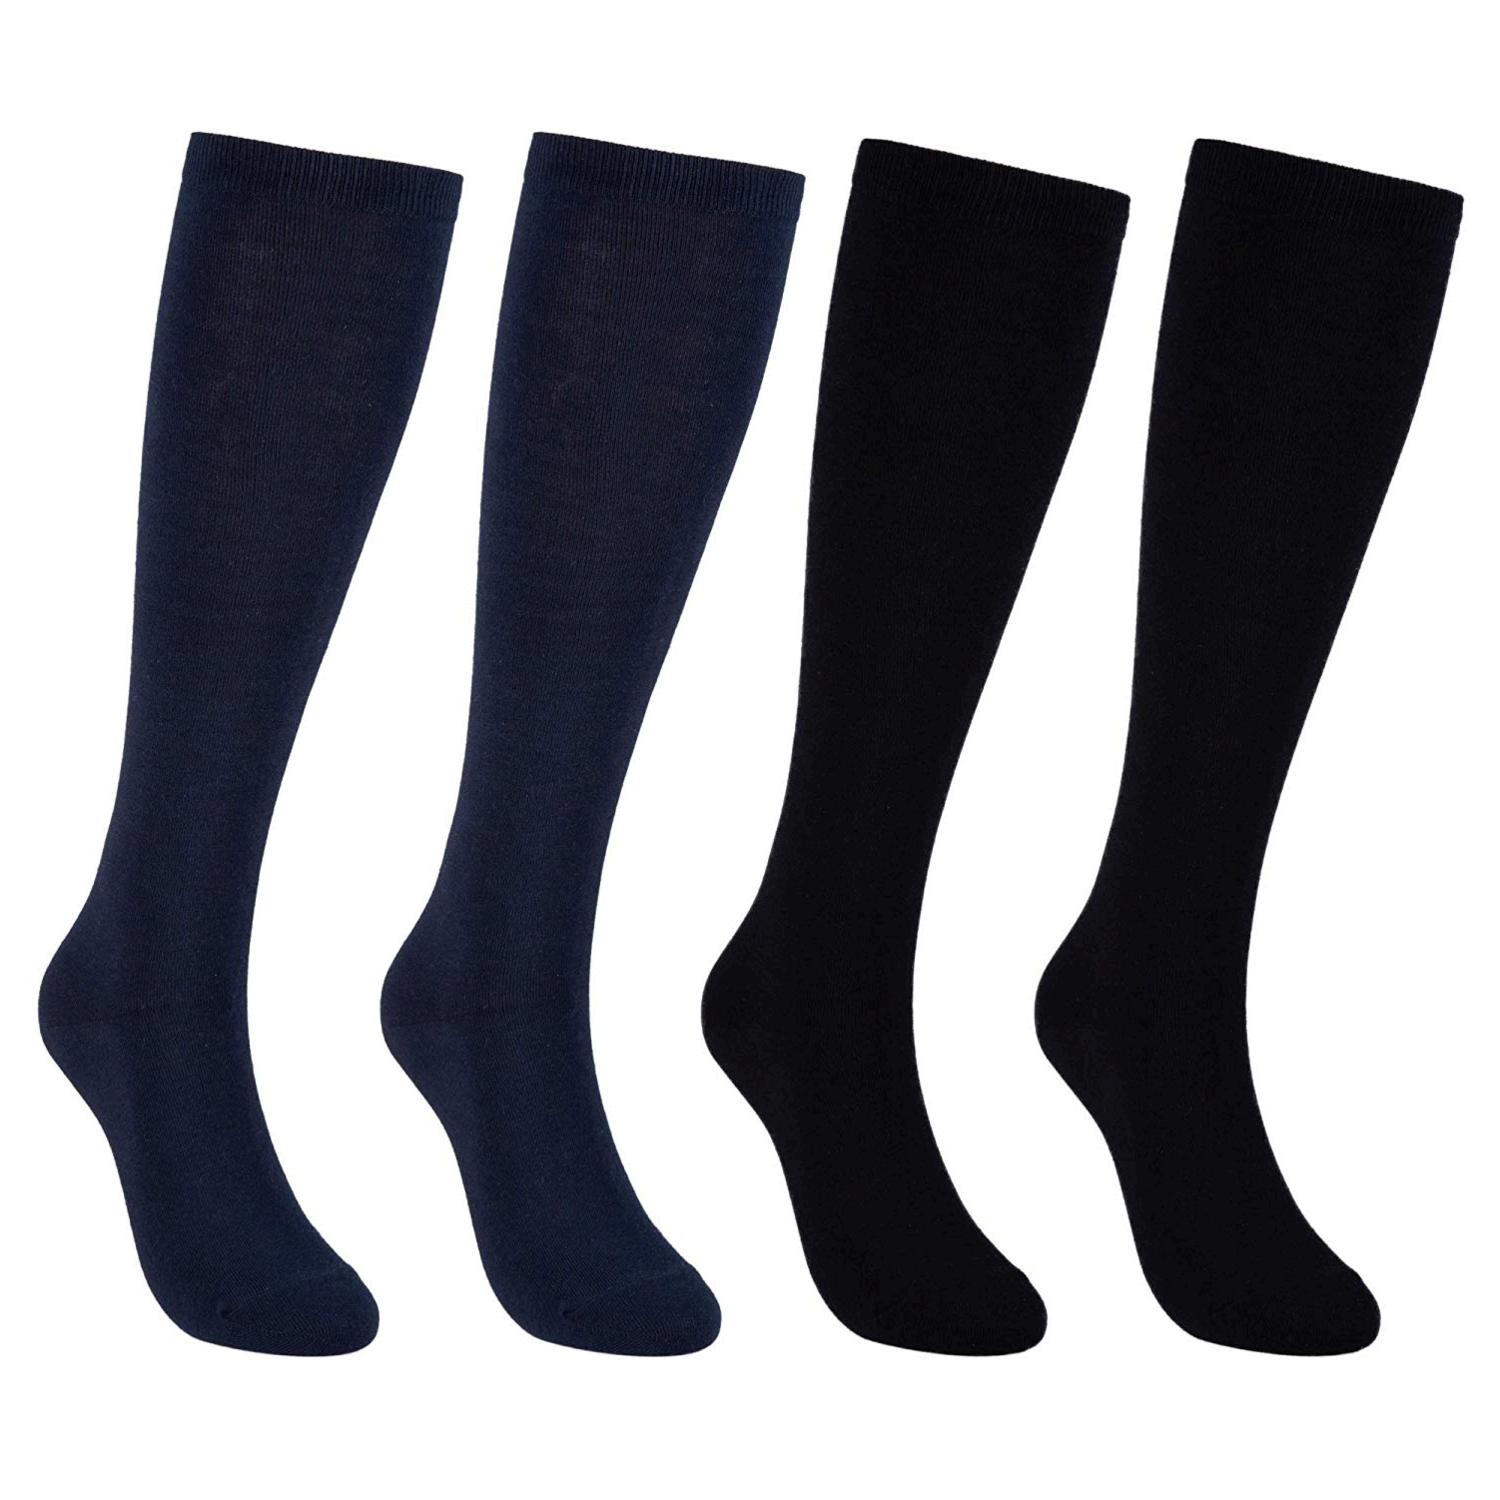 KONY Women's 4 Pairs Casual Knee High Socks Soft Stretch, Black, Size ...